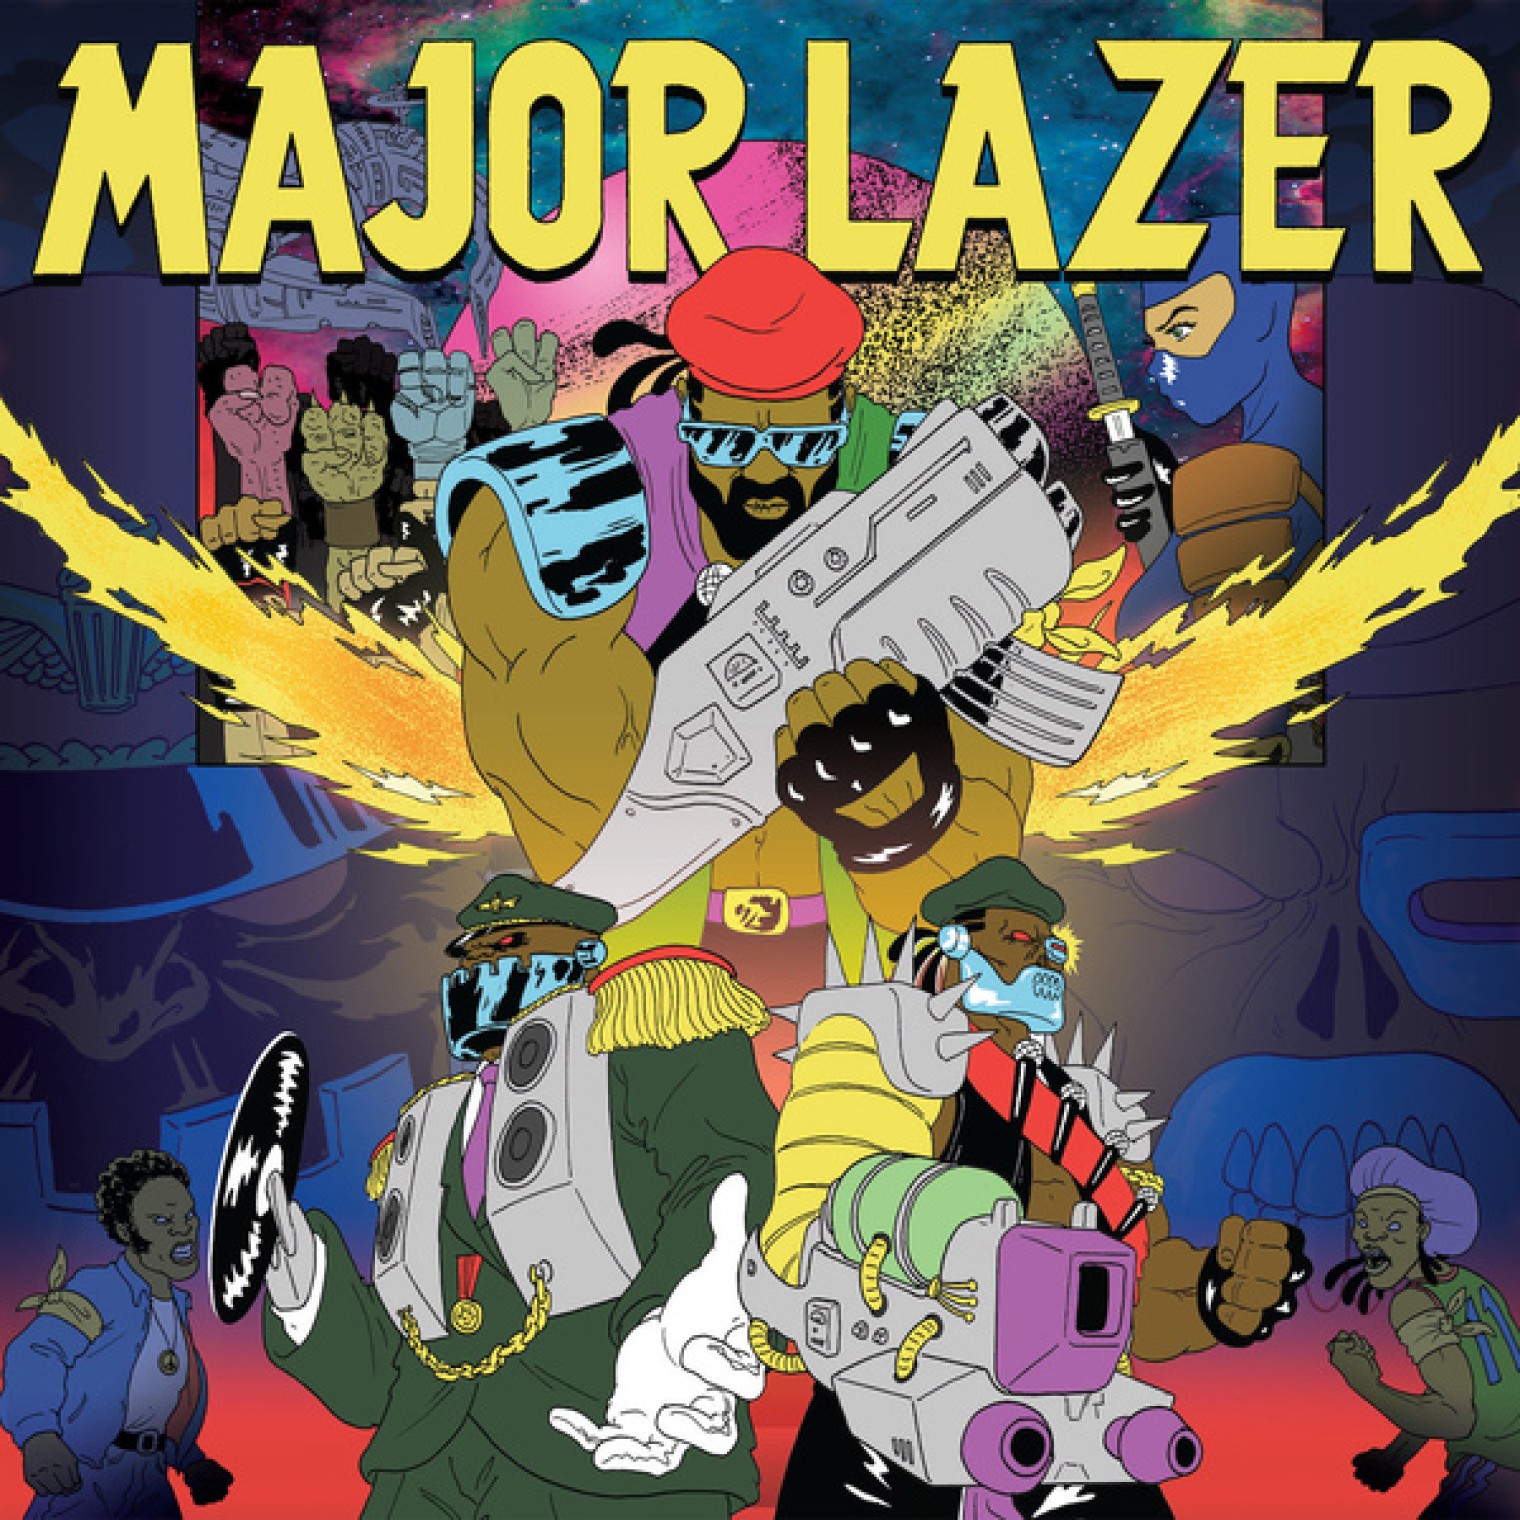 Free The Universe -  Major Lazer 